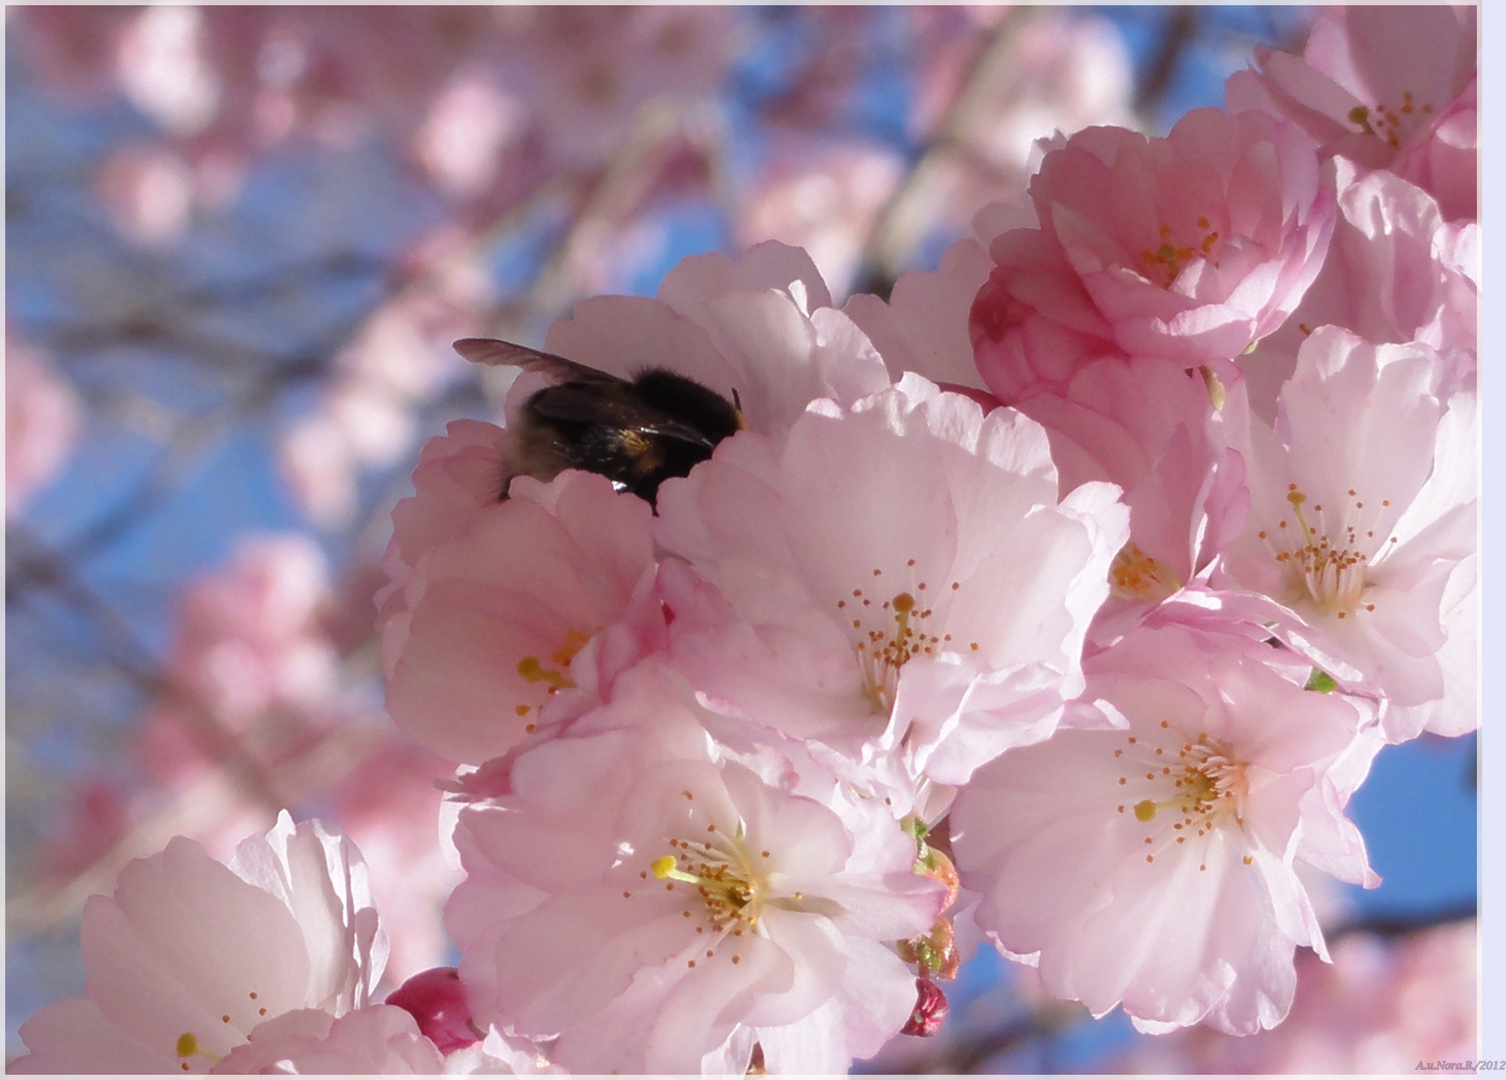 - erste Frühlingsblüten am Apfelbaum-